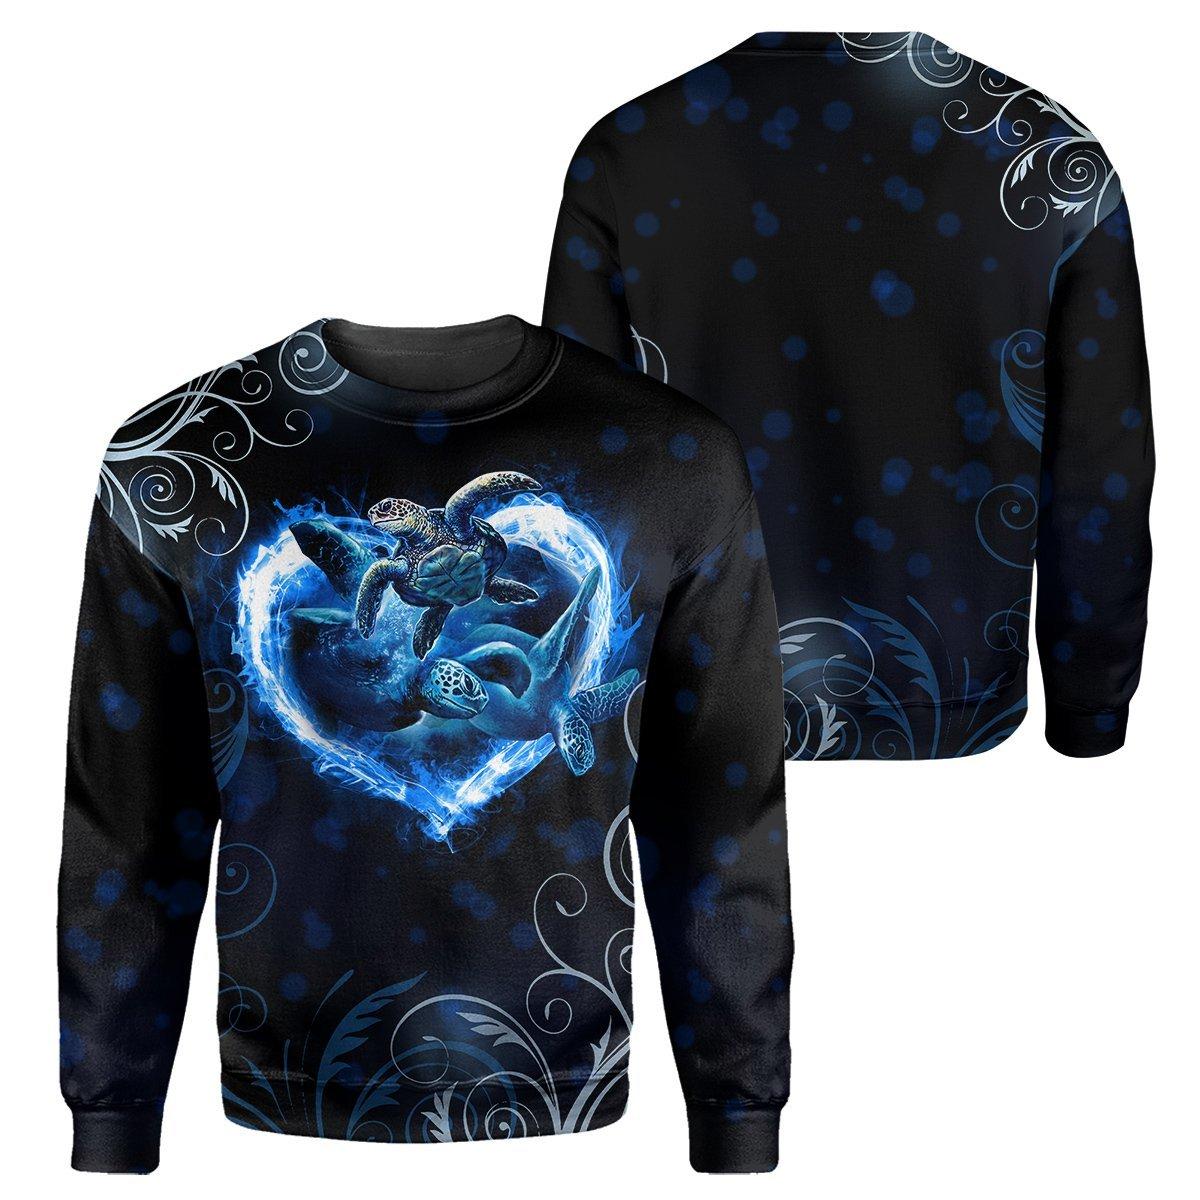 Gearhumans Heart Sea Turtle - 3D All Over Printed Shirt shirt 3D Apparel LONG SLEEVE S 